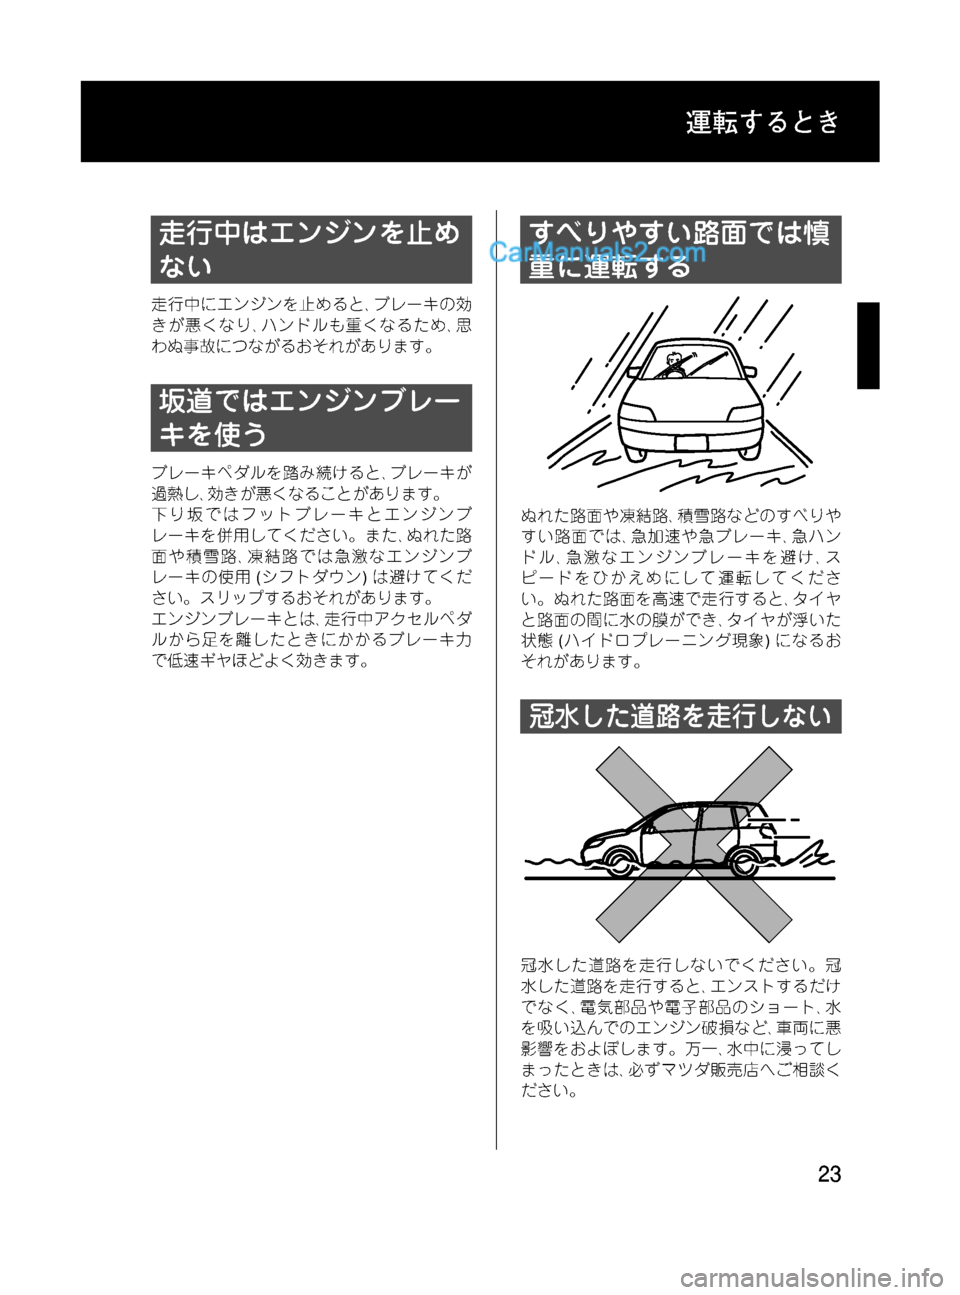 MAZDA MODEL VERISA 2007  ベリーサ｜取扱説明書 (in Japanese) Black plate (23,1)
走行中はエンジンを止め
ない
走行中にエンジンを止めると､ブレーキの効
きが悪くなり､ハンドルも重くなるため､思
わぬ事故につ